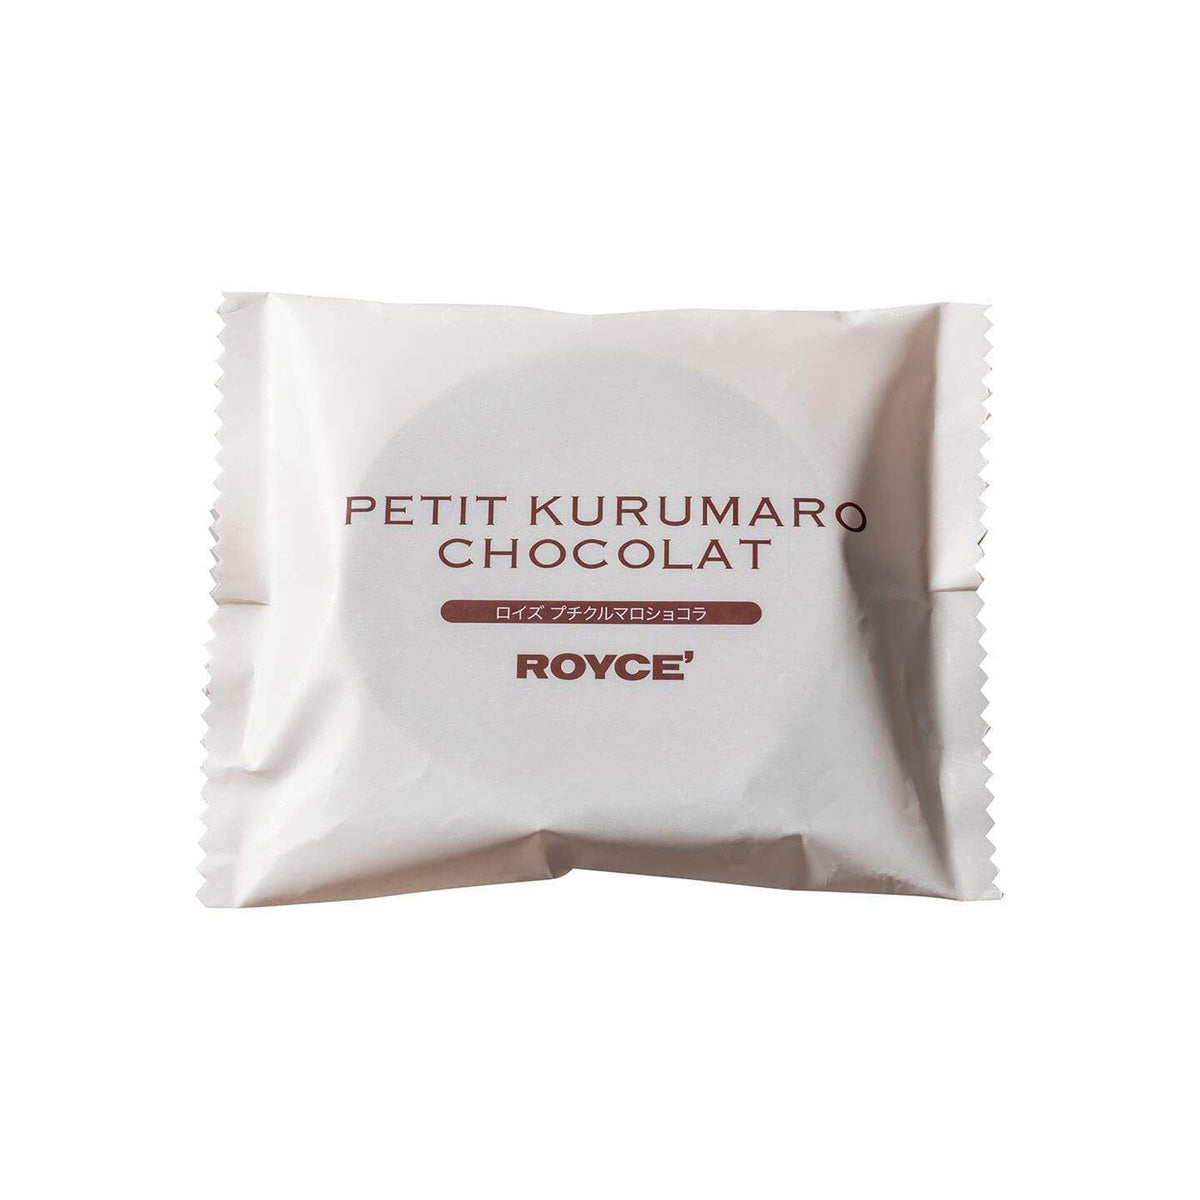 ROYCE' Chocolate - Petit Kurumaro Chocolat (5 Pcs) - Image shows individually-wrapped chocolate disc in white packaging. Text says Petit Kurumaro Chocolat ROYCE'.